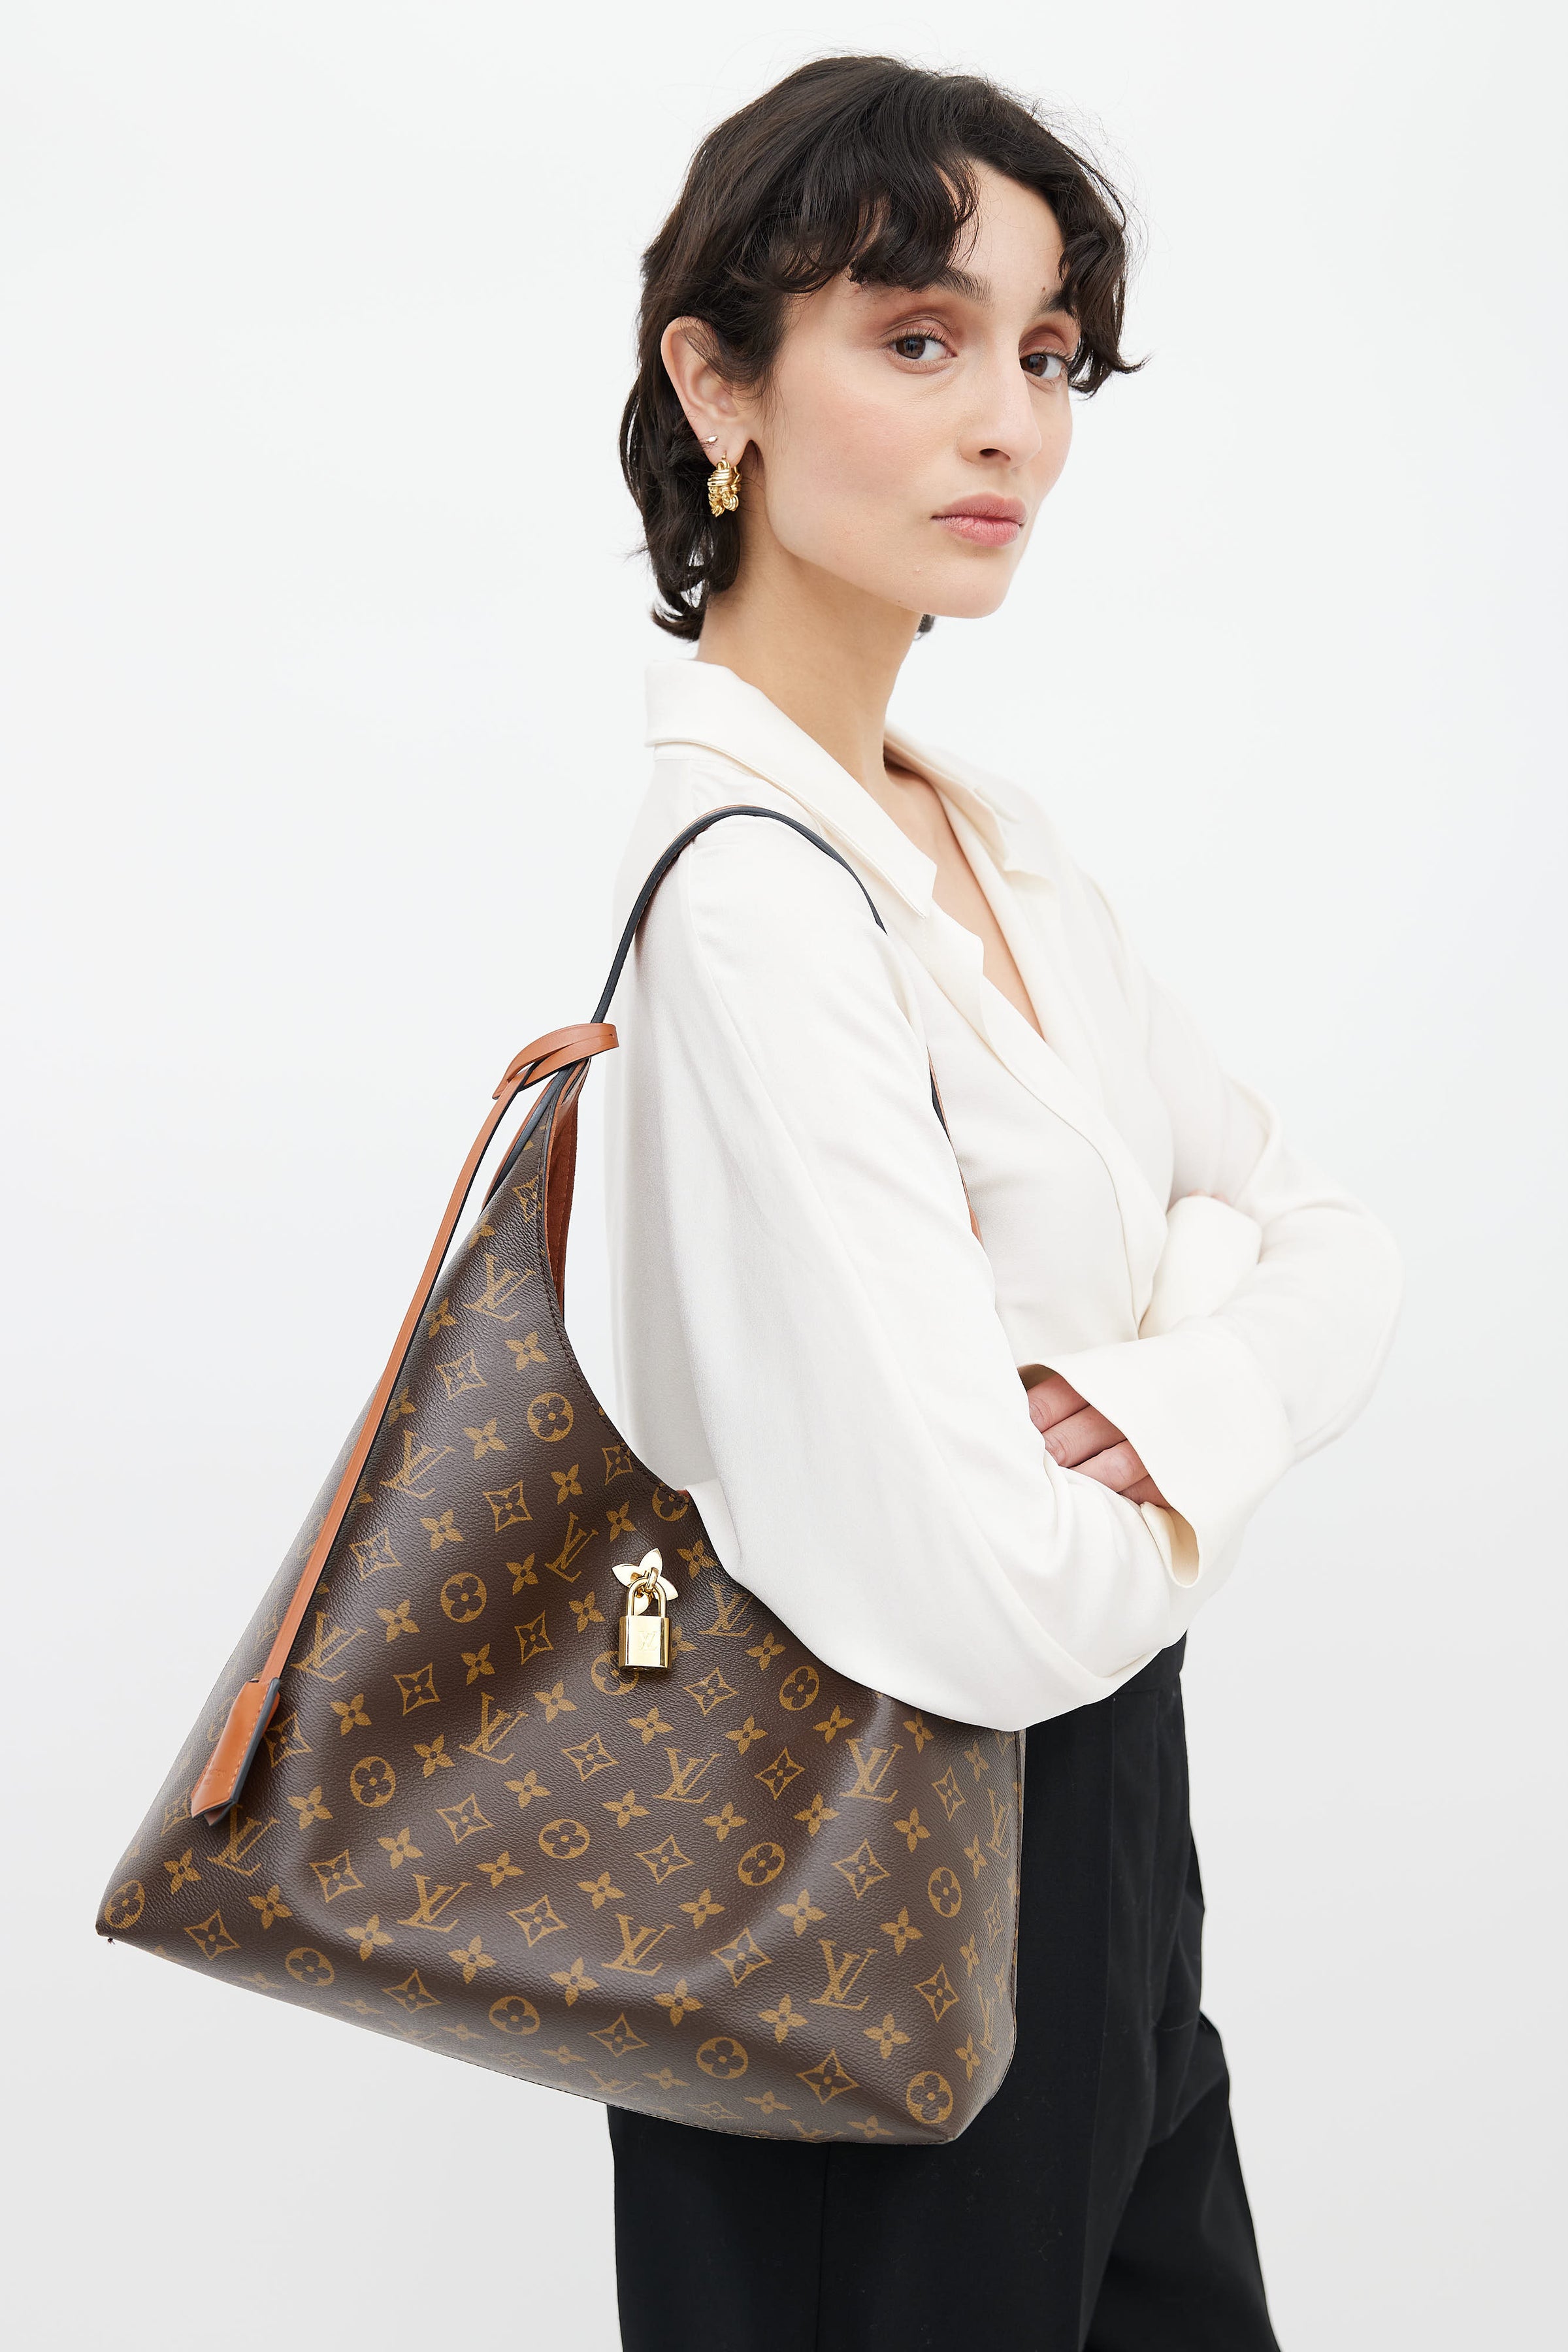 Louis Vuitton Authenticated Flower Tote Handbag